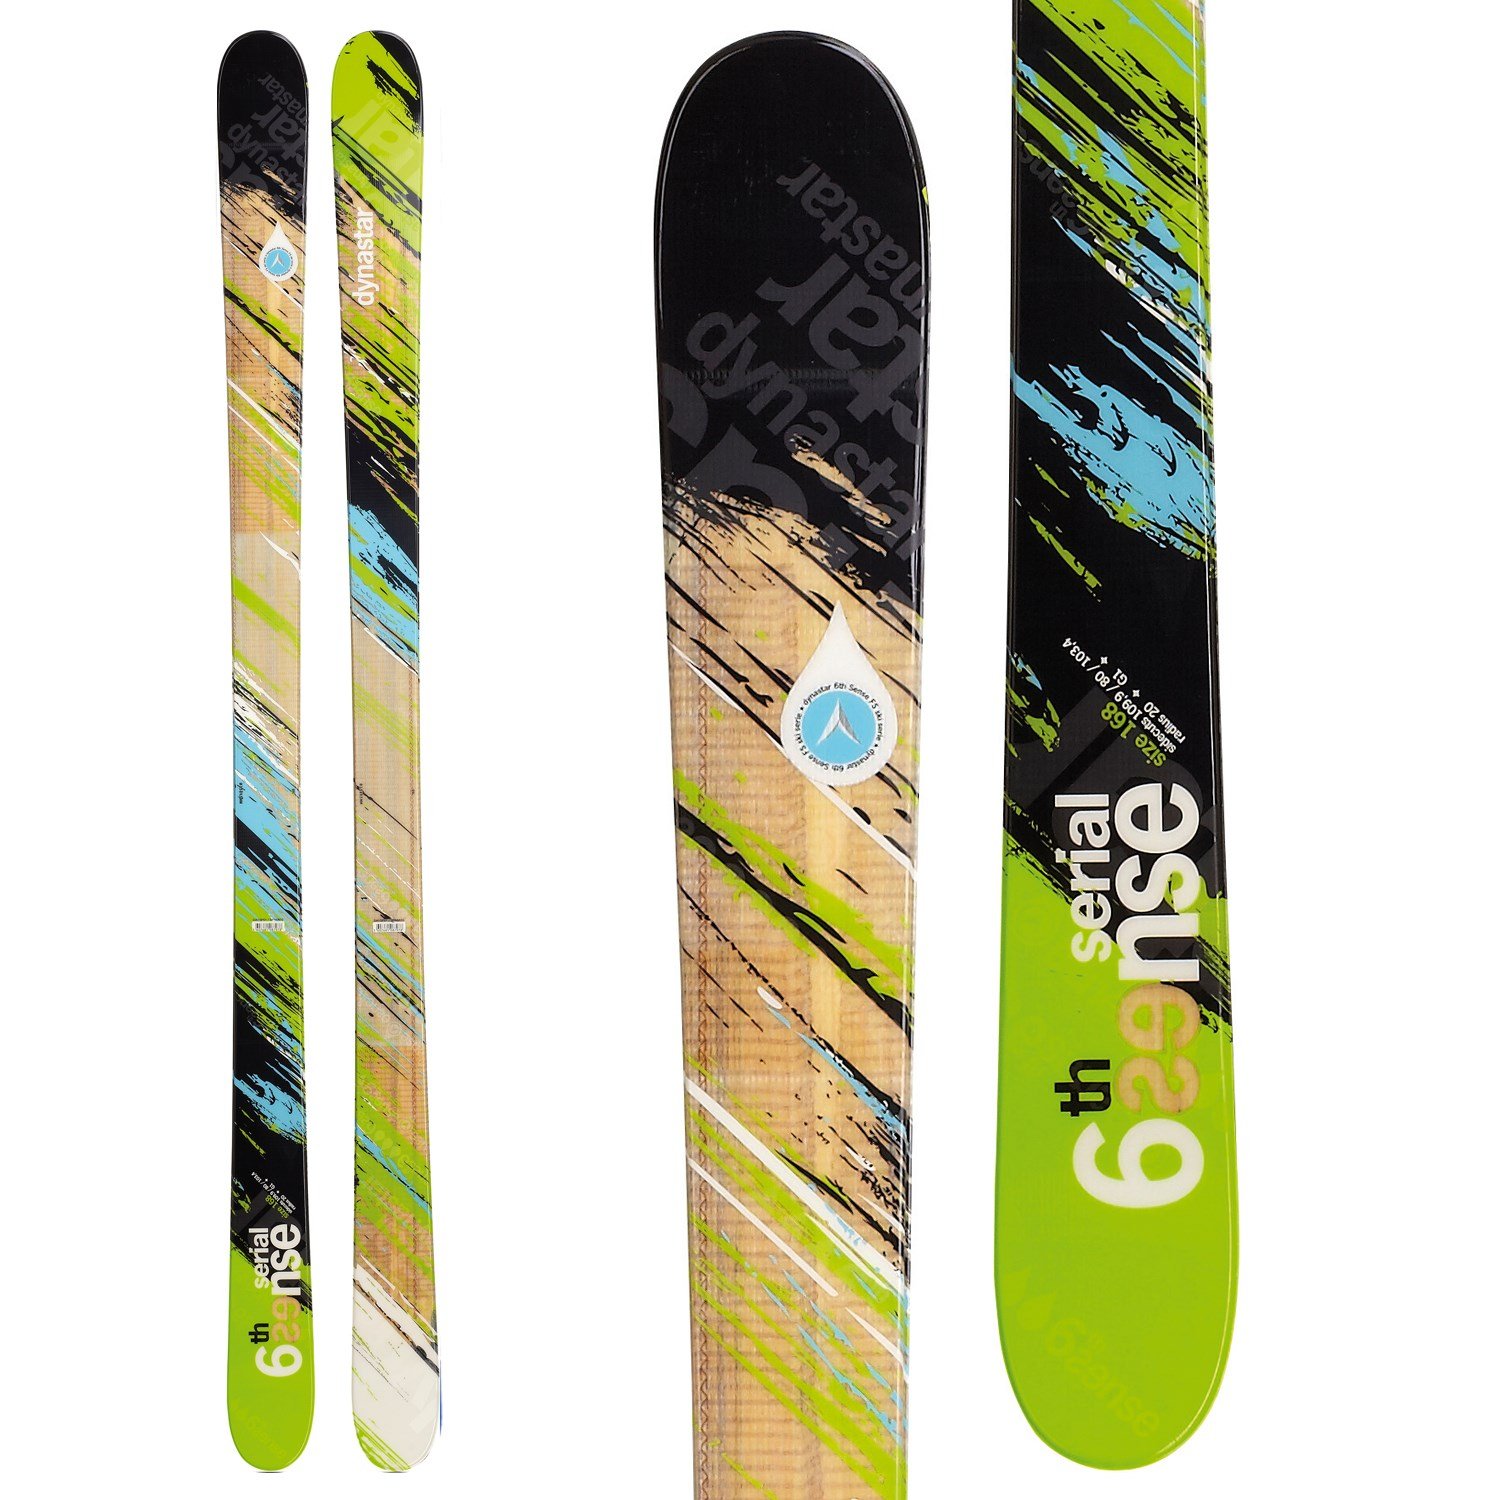 Dynastar 6th Sense Serial Skis 2013 | evo